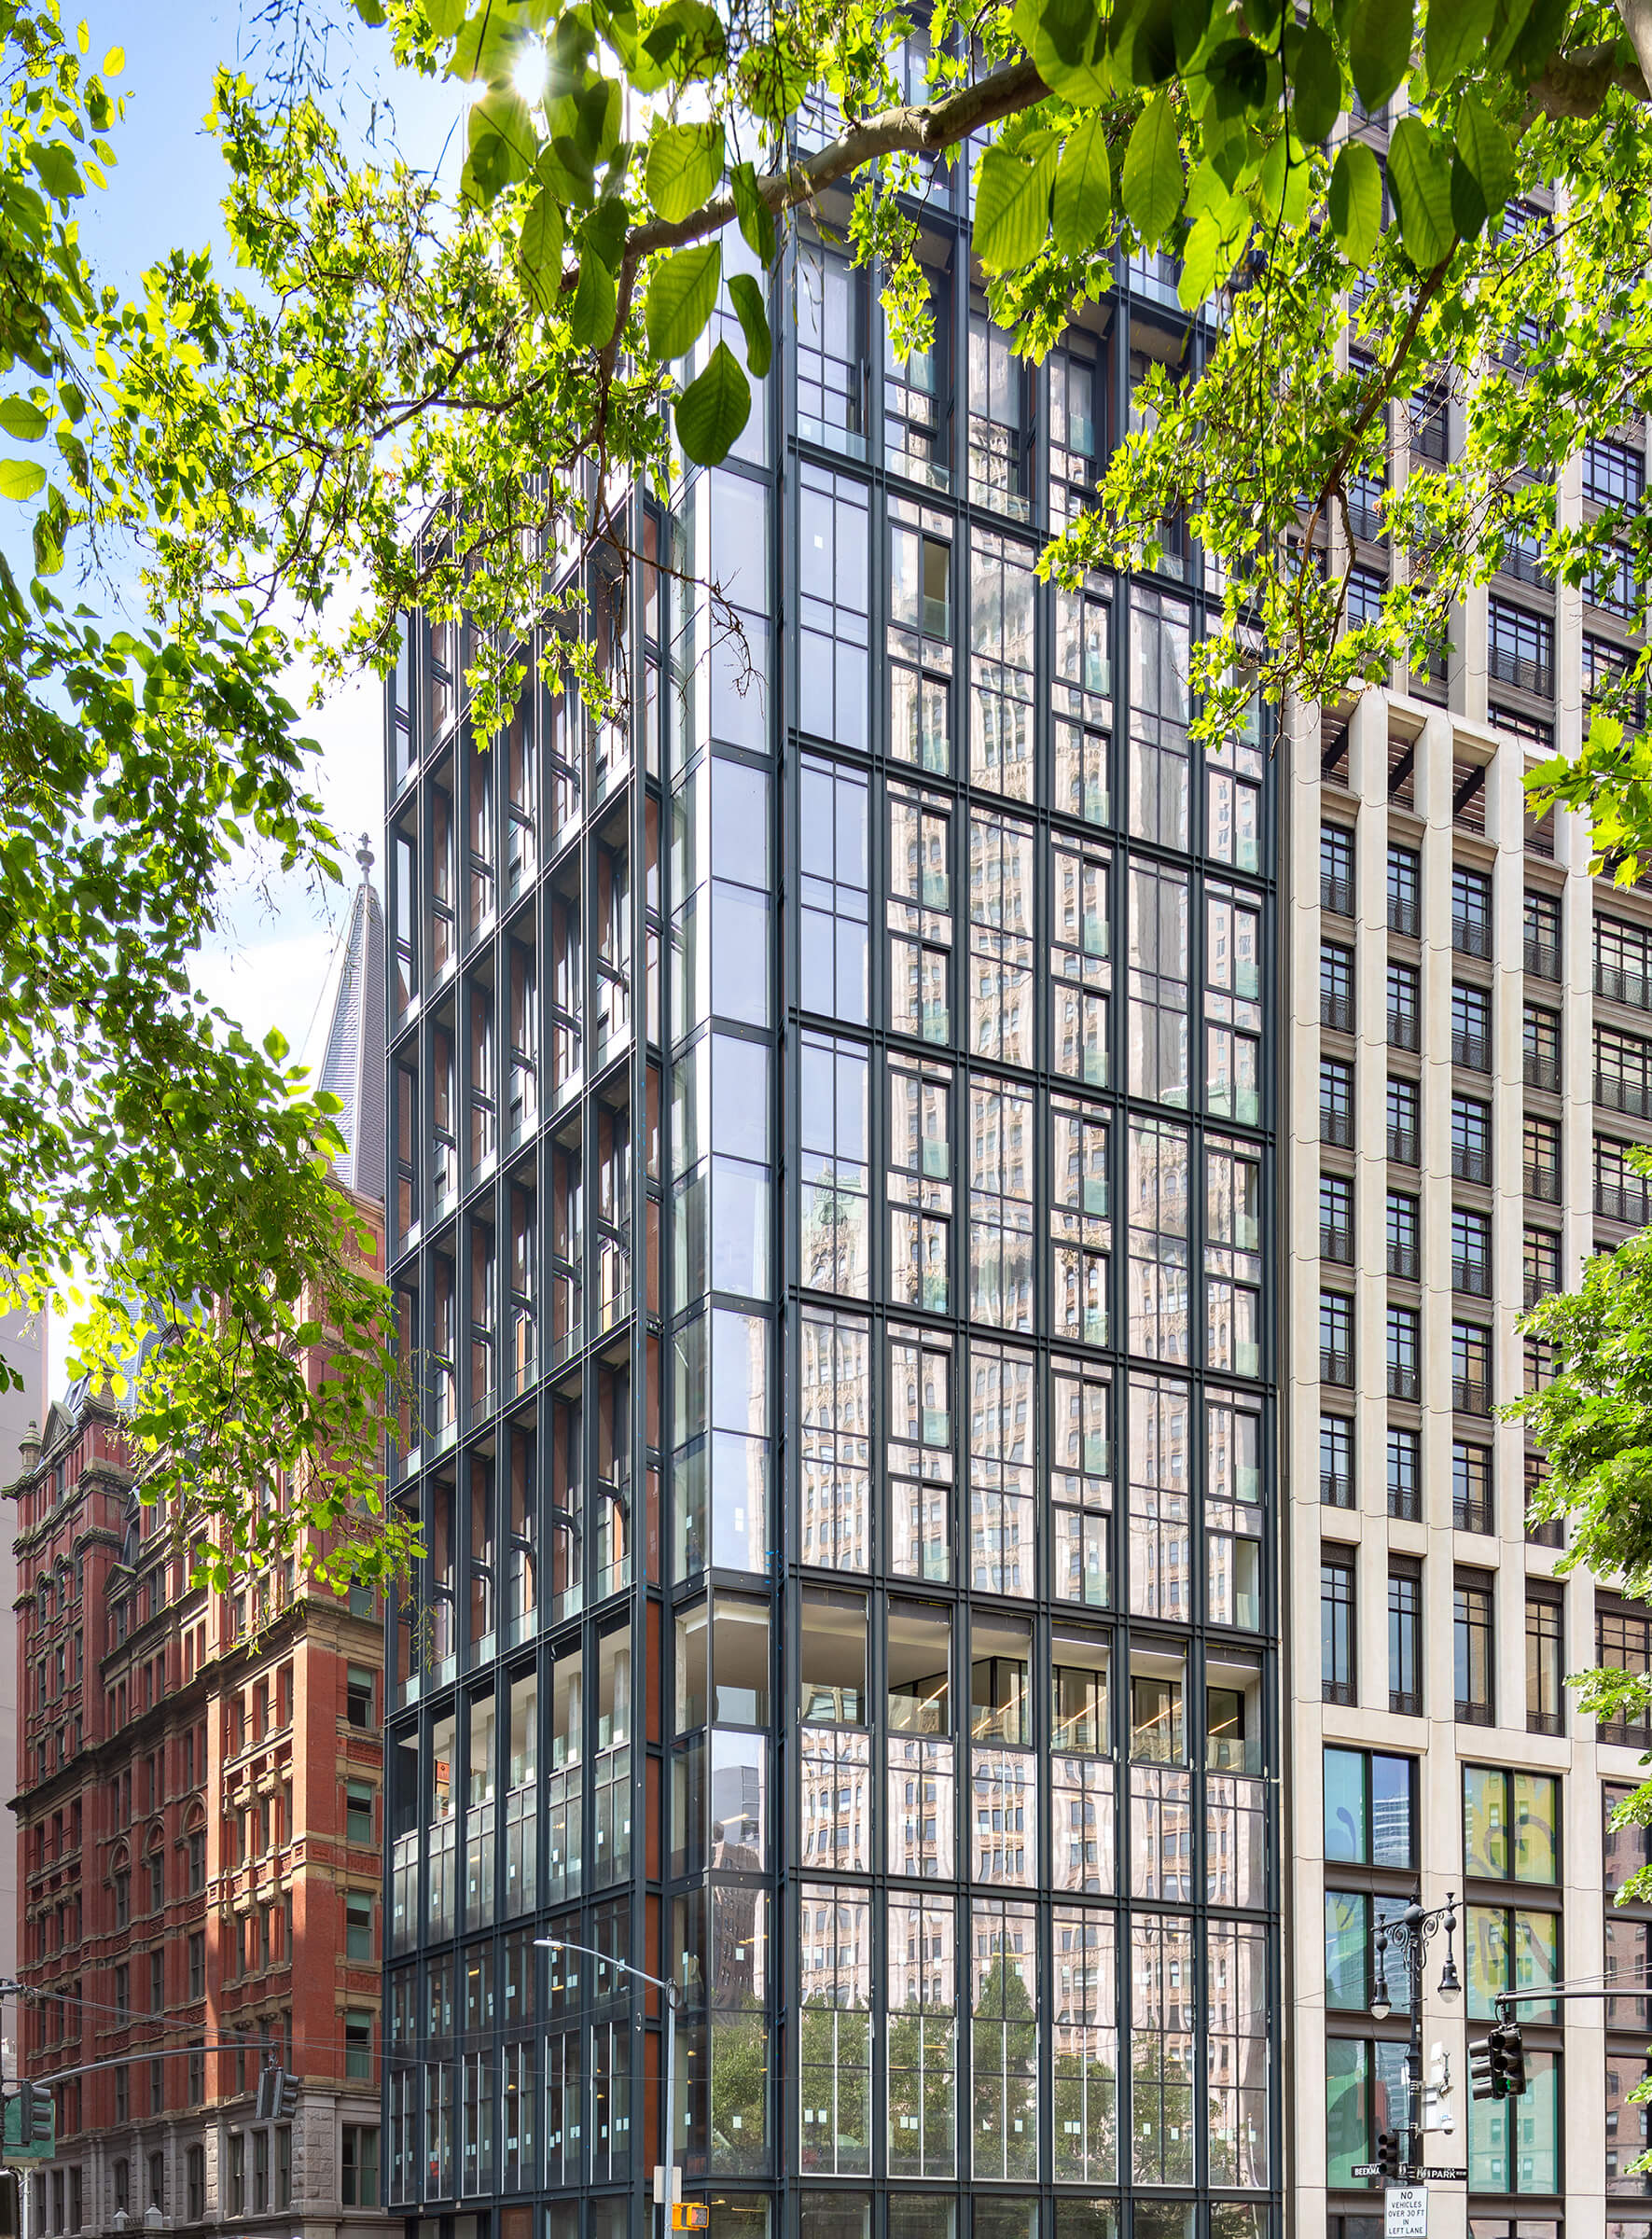 No. 33 Park Row, a sleek tower with all glass facade